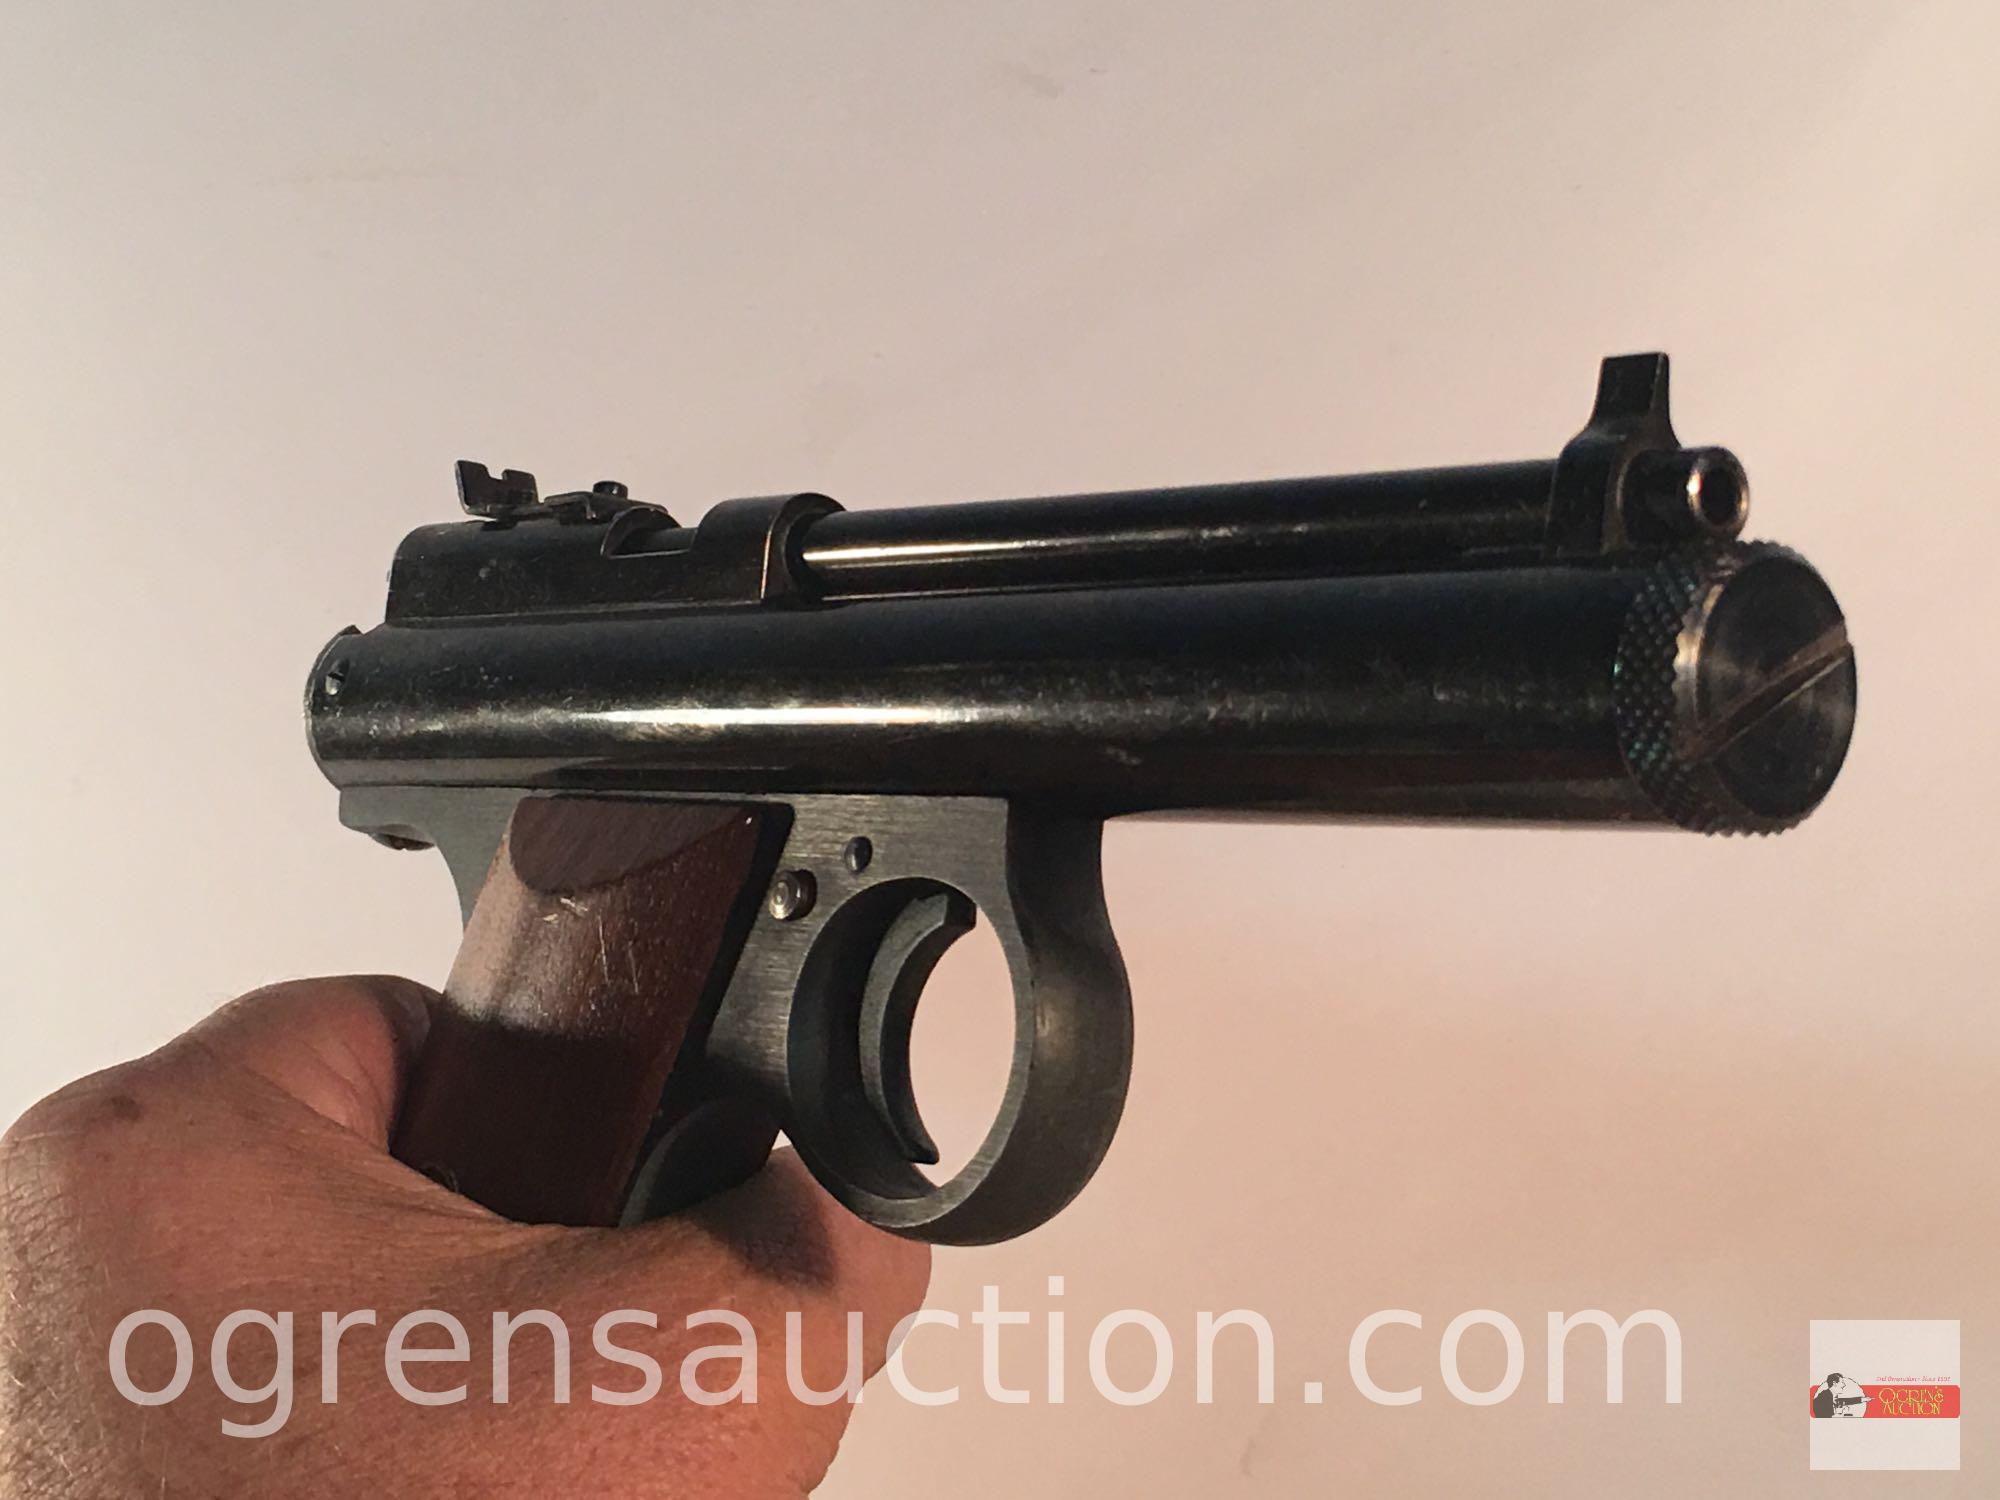 Benjamin CO2 gas pistol, 4 cartridges, orig. box